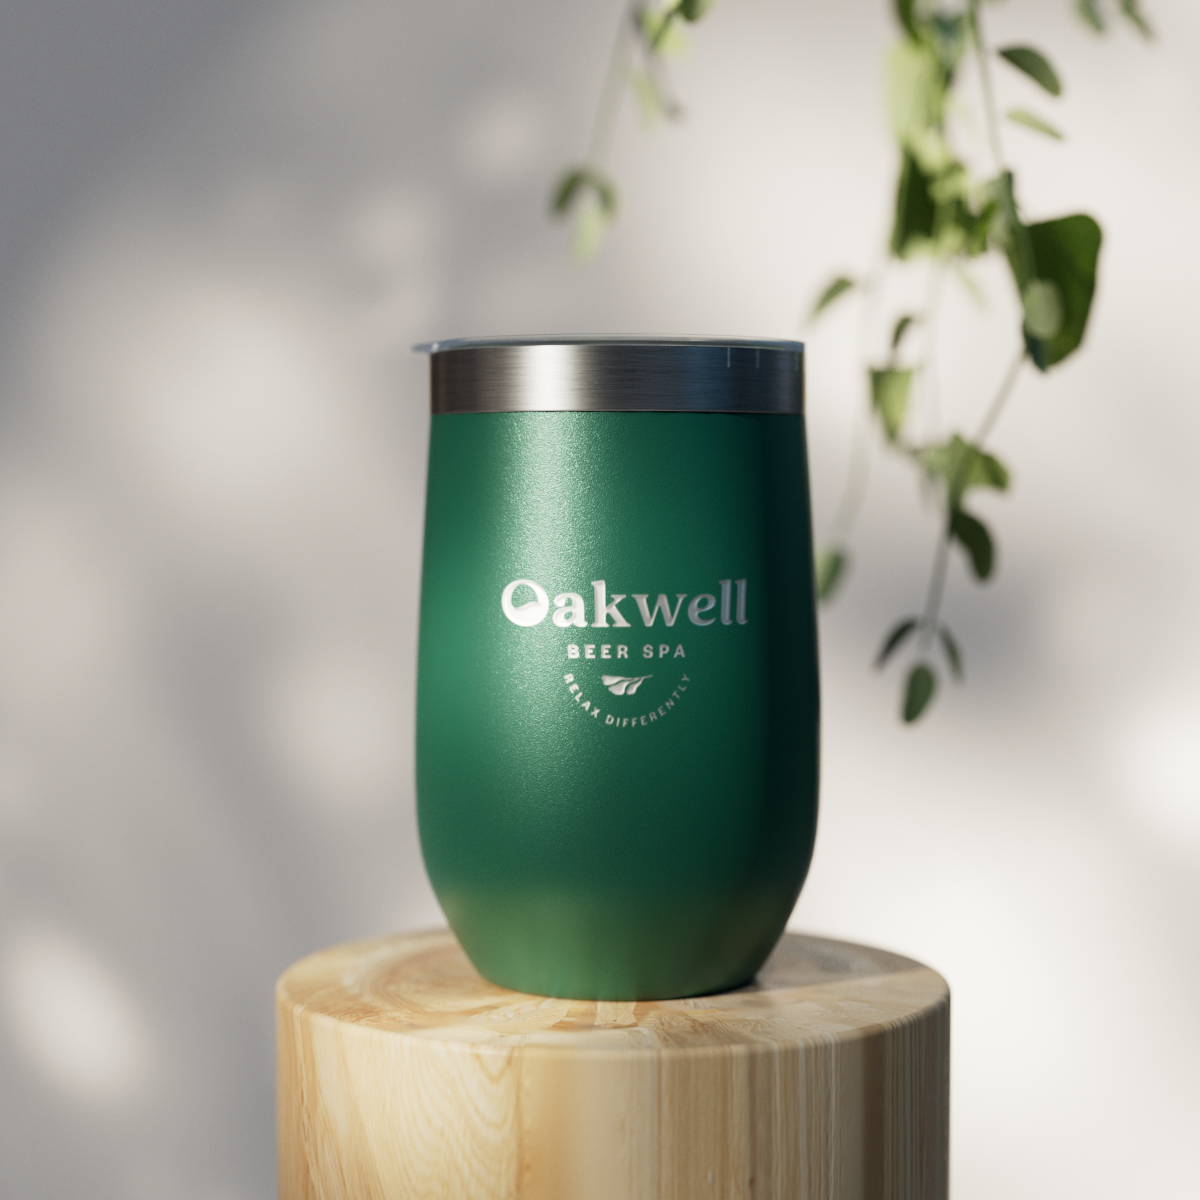 Oakwell Beer Spa stainless steel tumbler